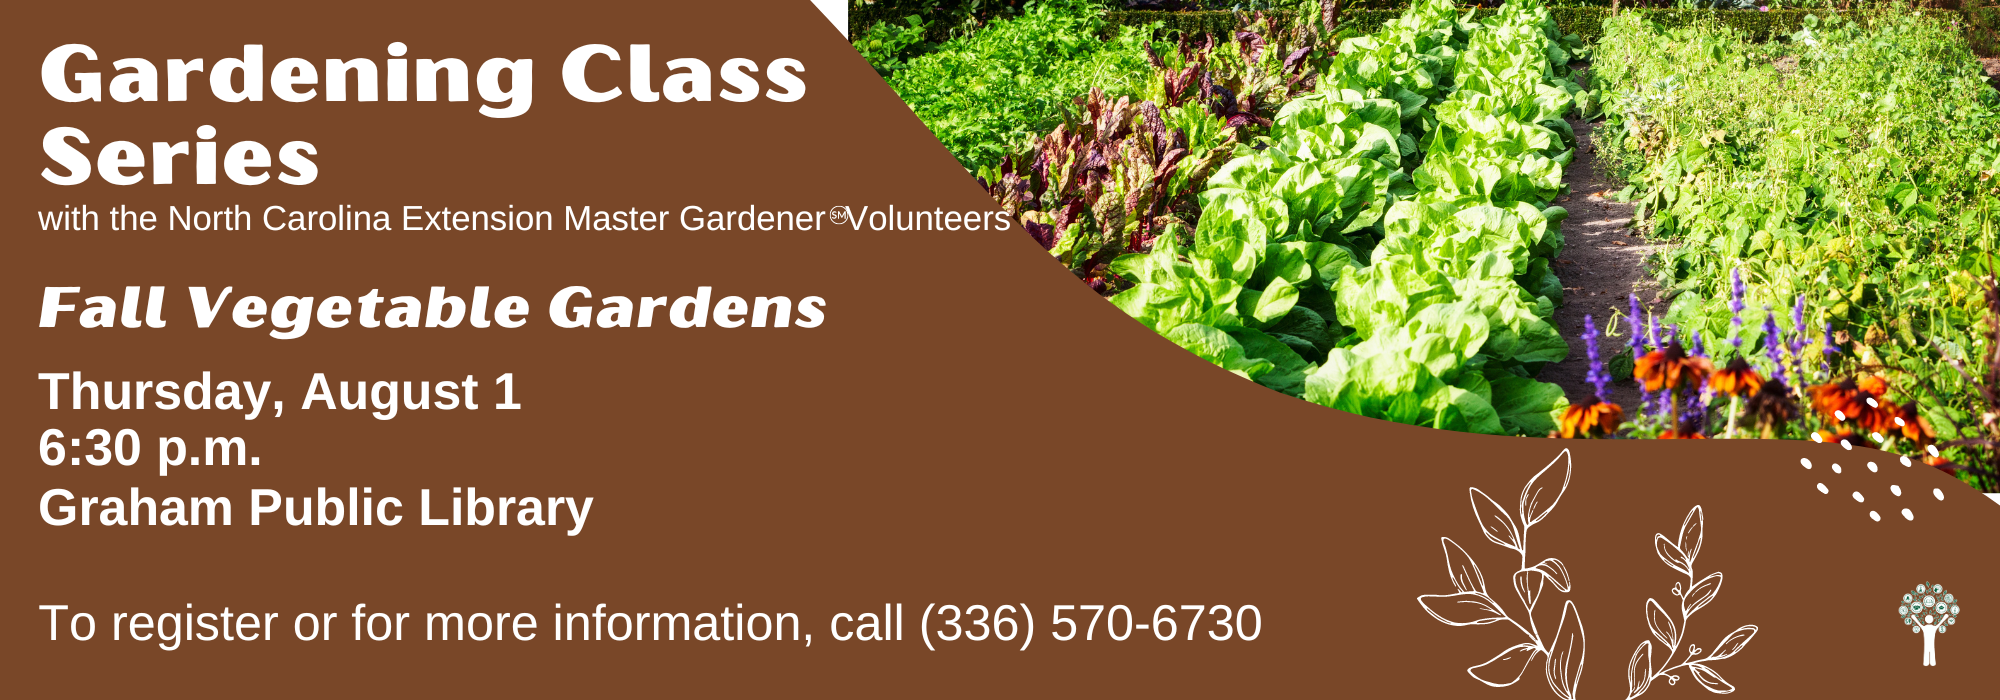 8.1 at 630 pm - Gardening series - Fall Vegetable Gardens at Graham